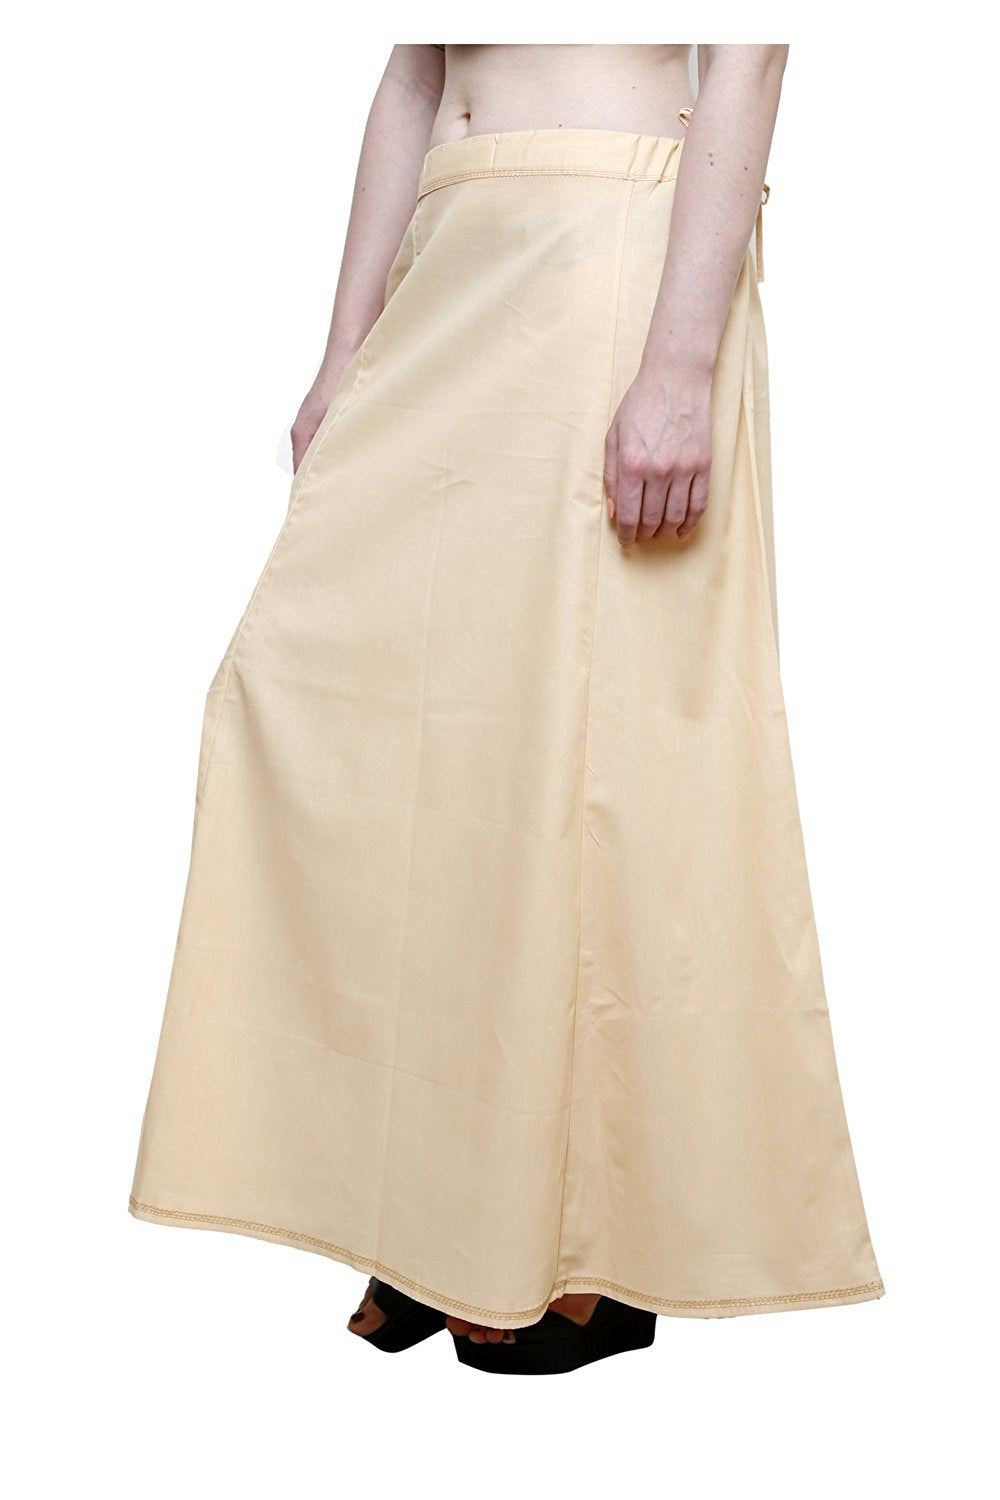 Stylesindia Women's Cotton Readymade Indian Inskirt Saree petticoats Underskirt - Free Size-LigheBeige